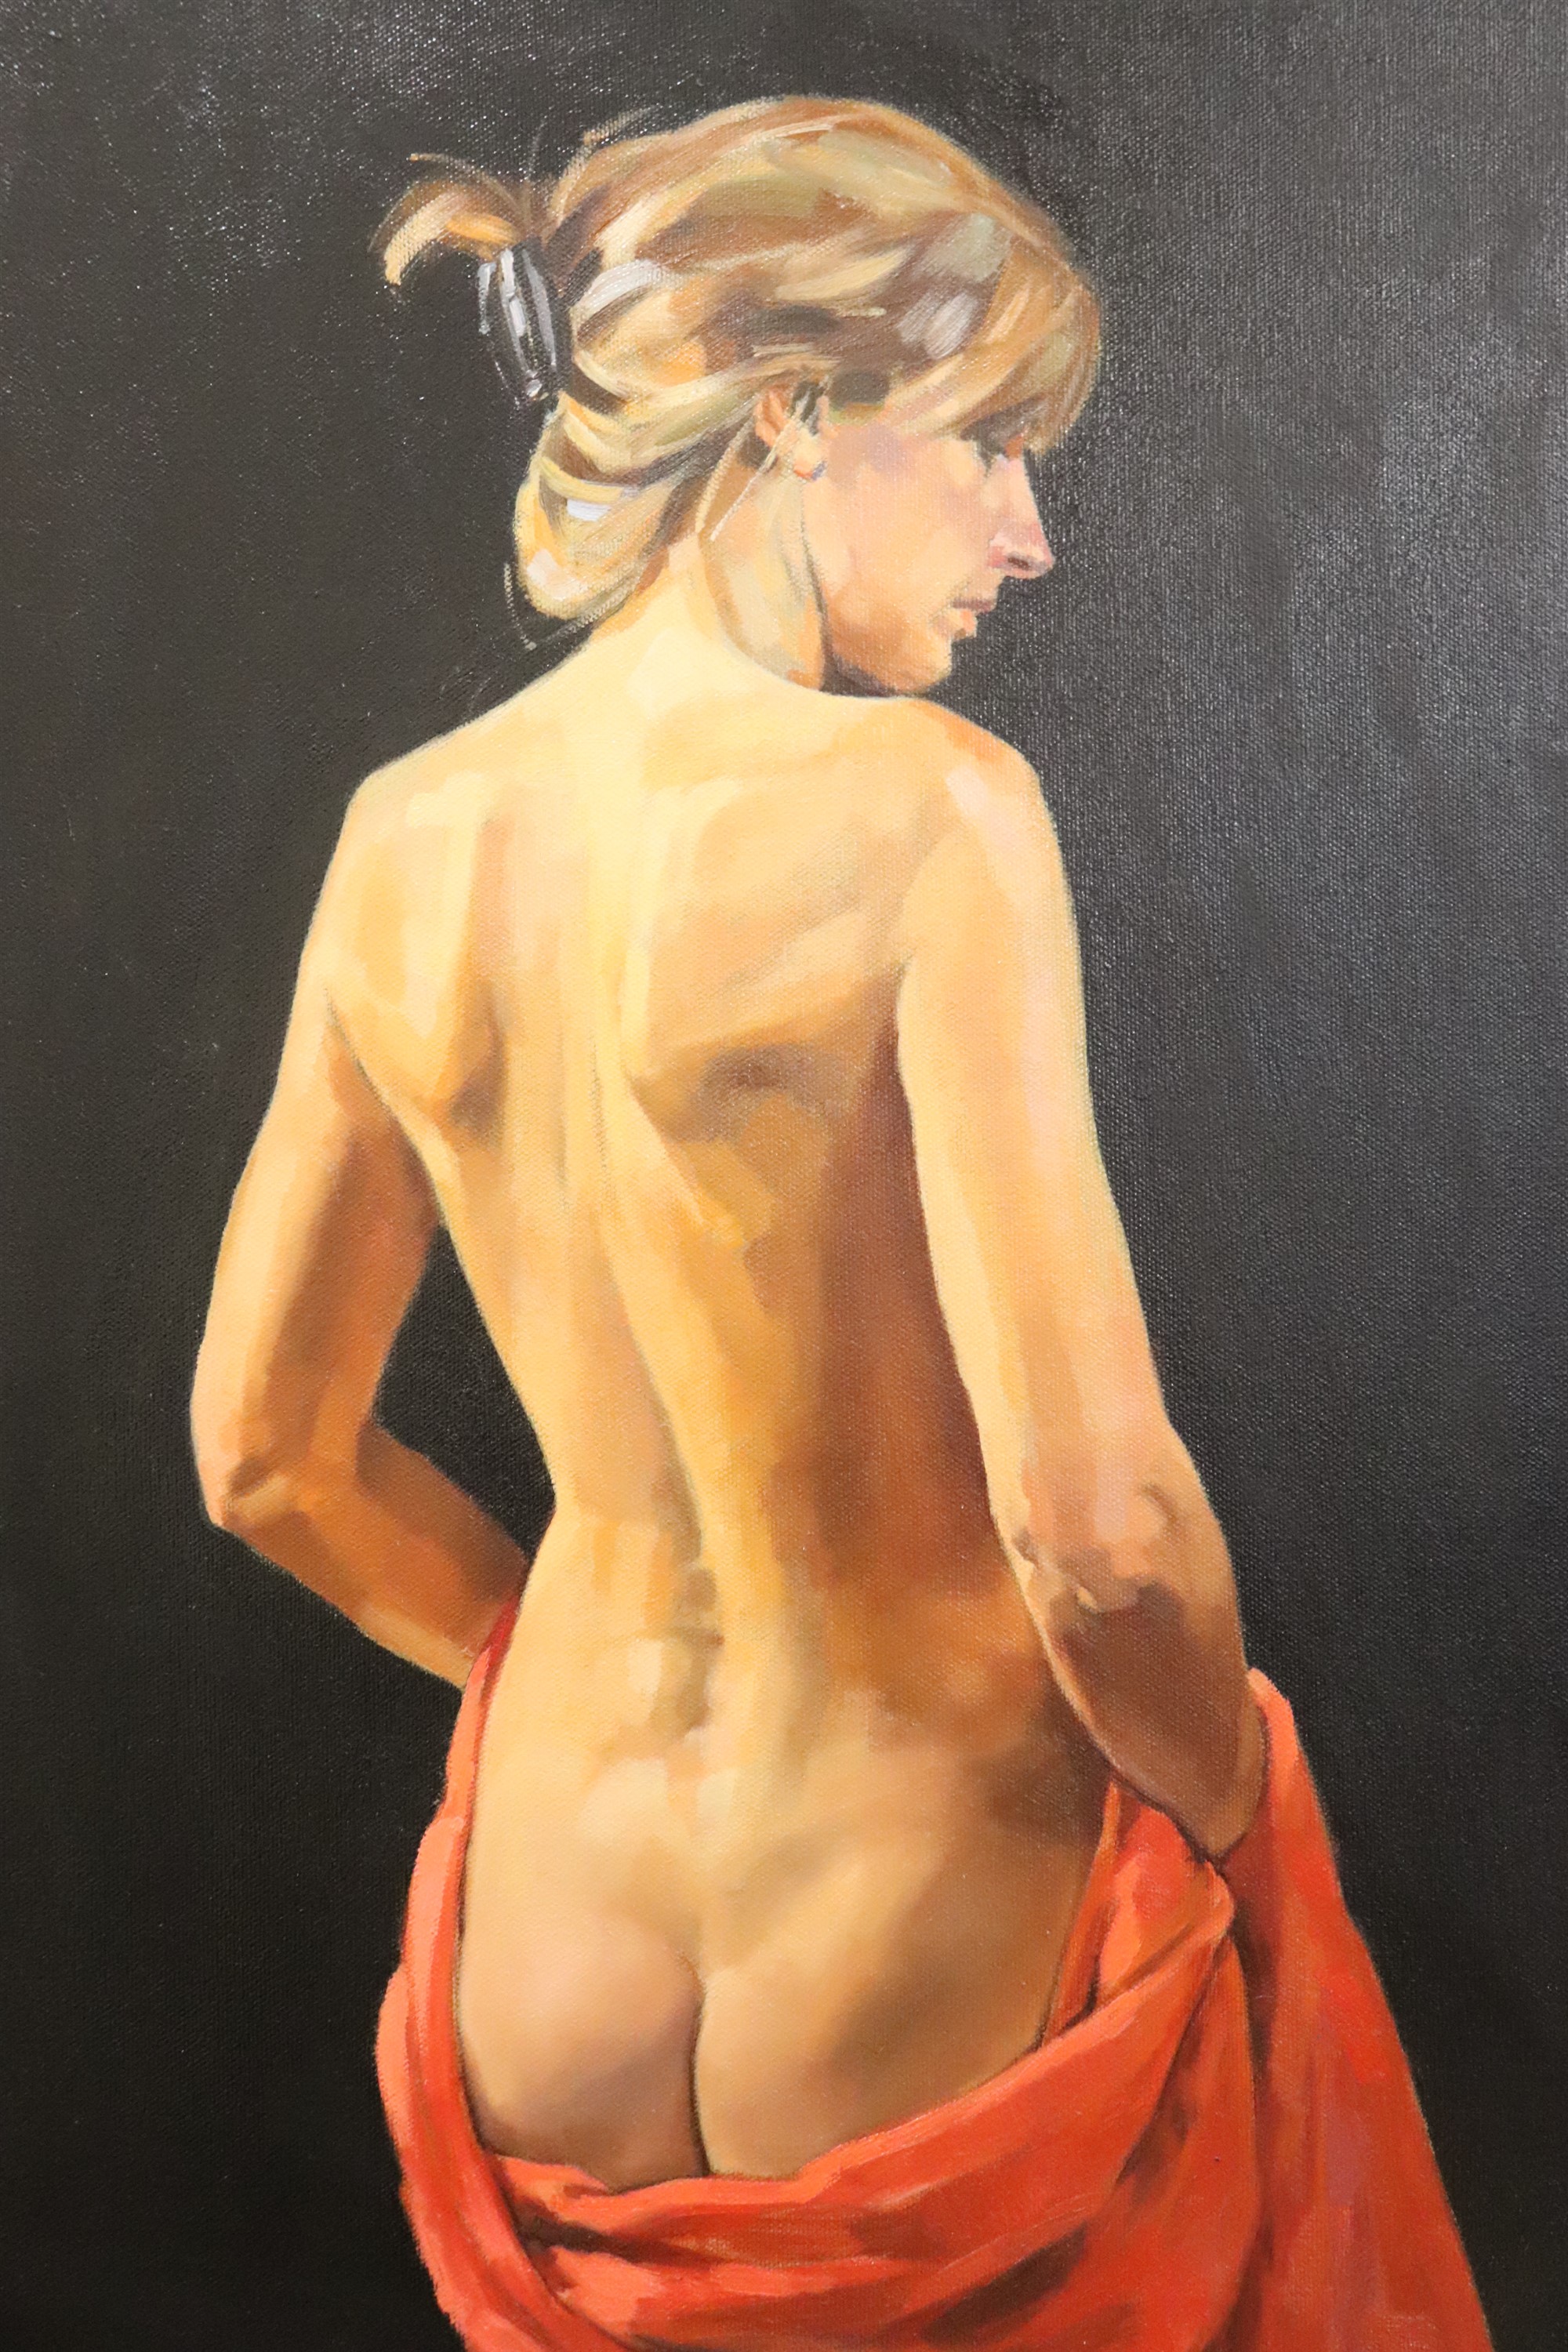 Jack Morrocco (Scottish, Contemporary) "Nude with red drape", chiaroscuro oil on canvas, Thompson'